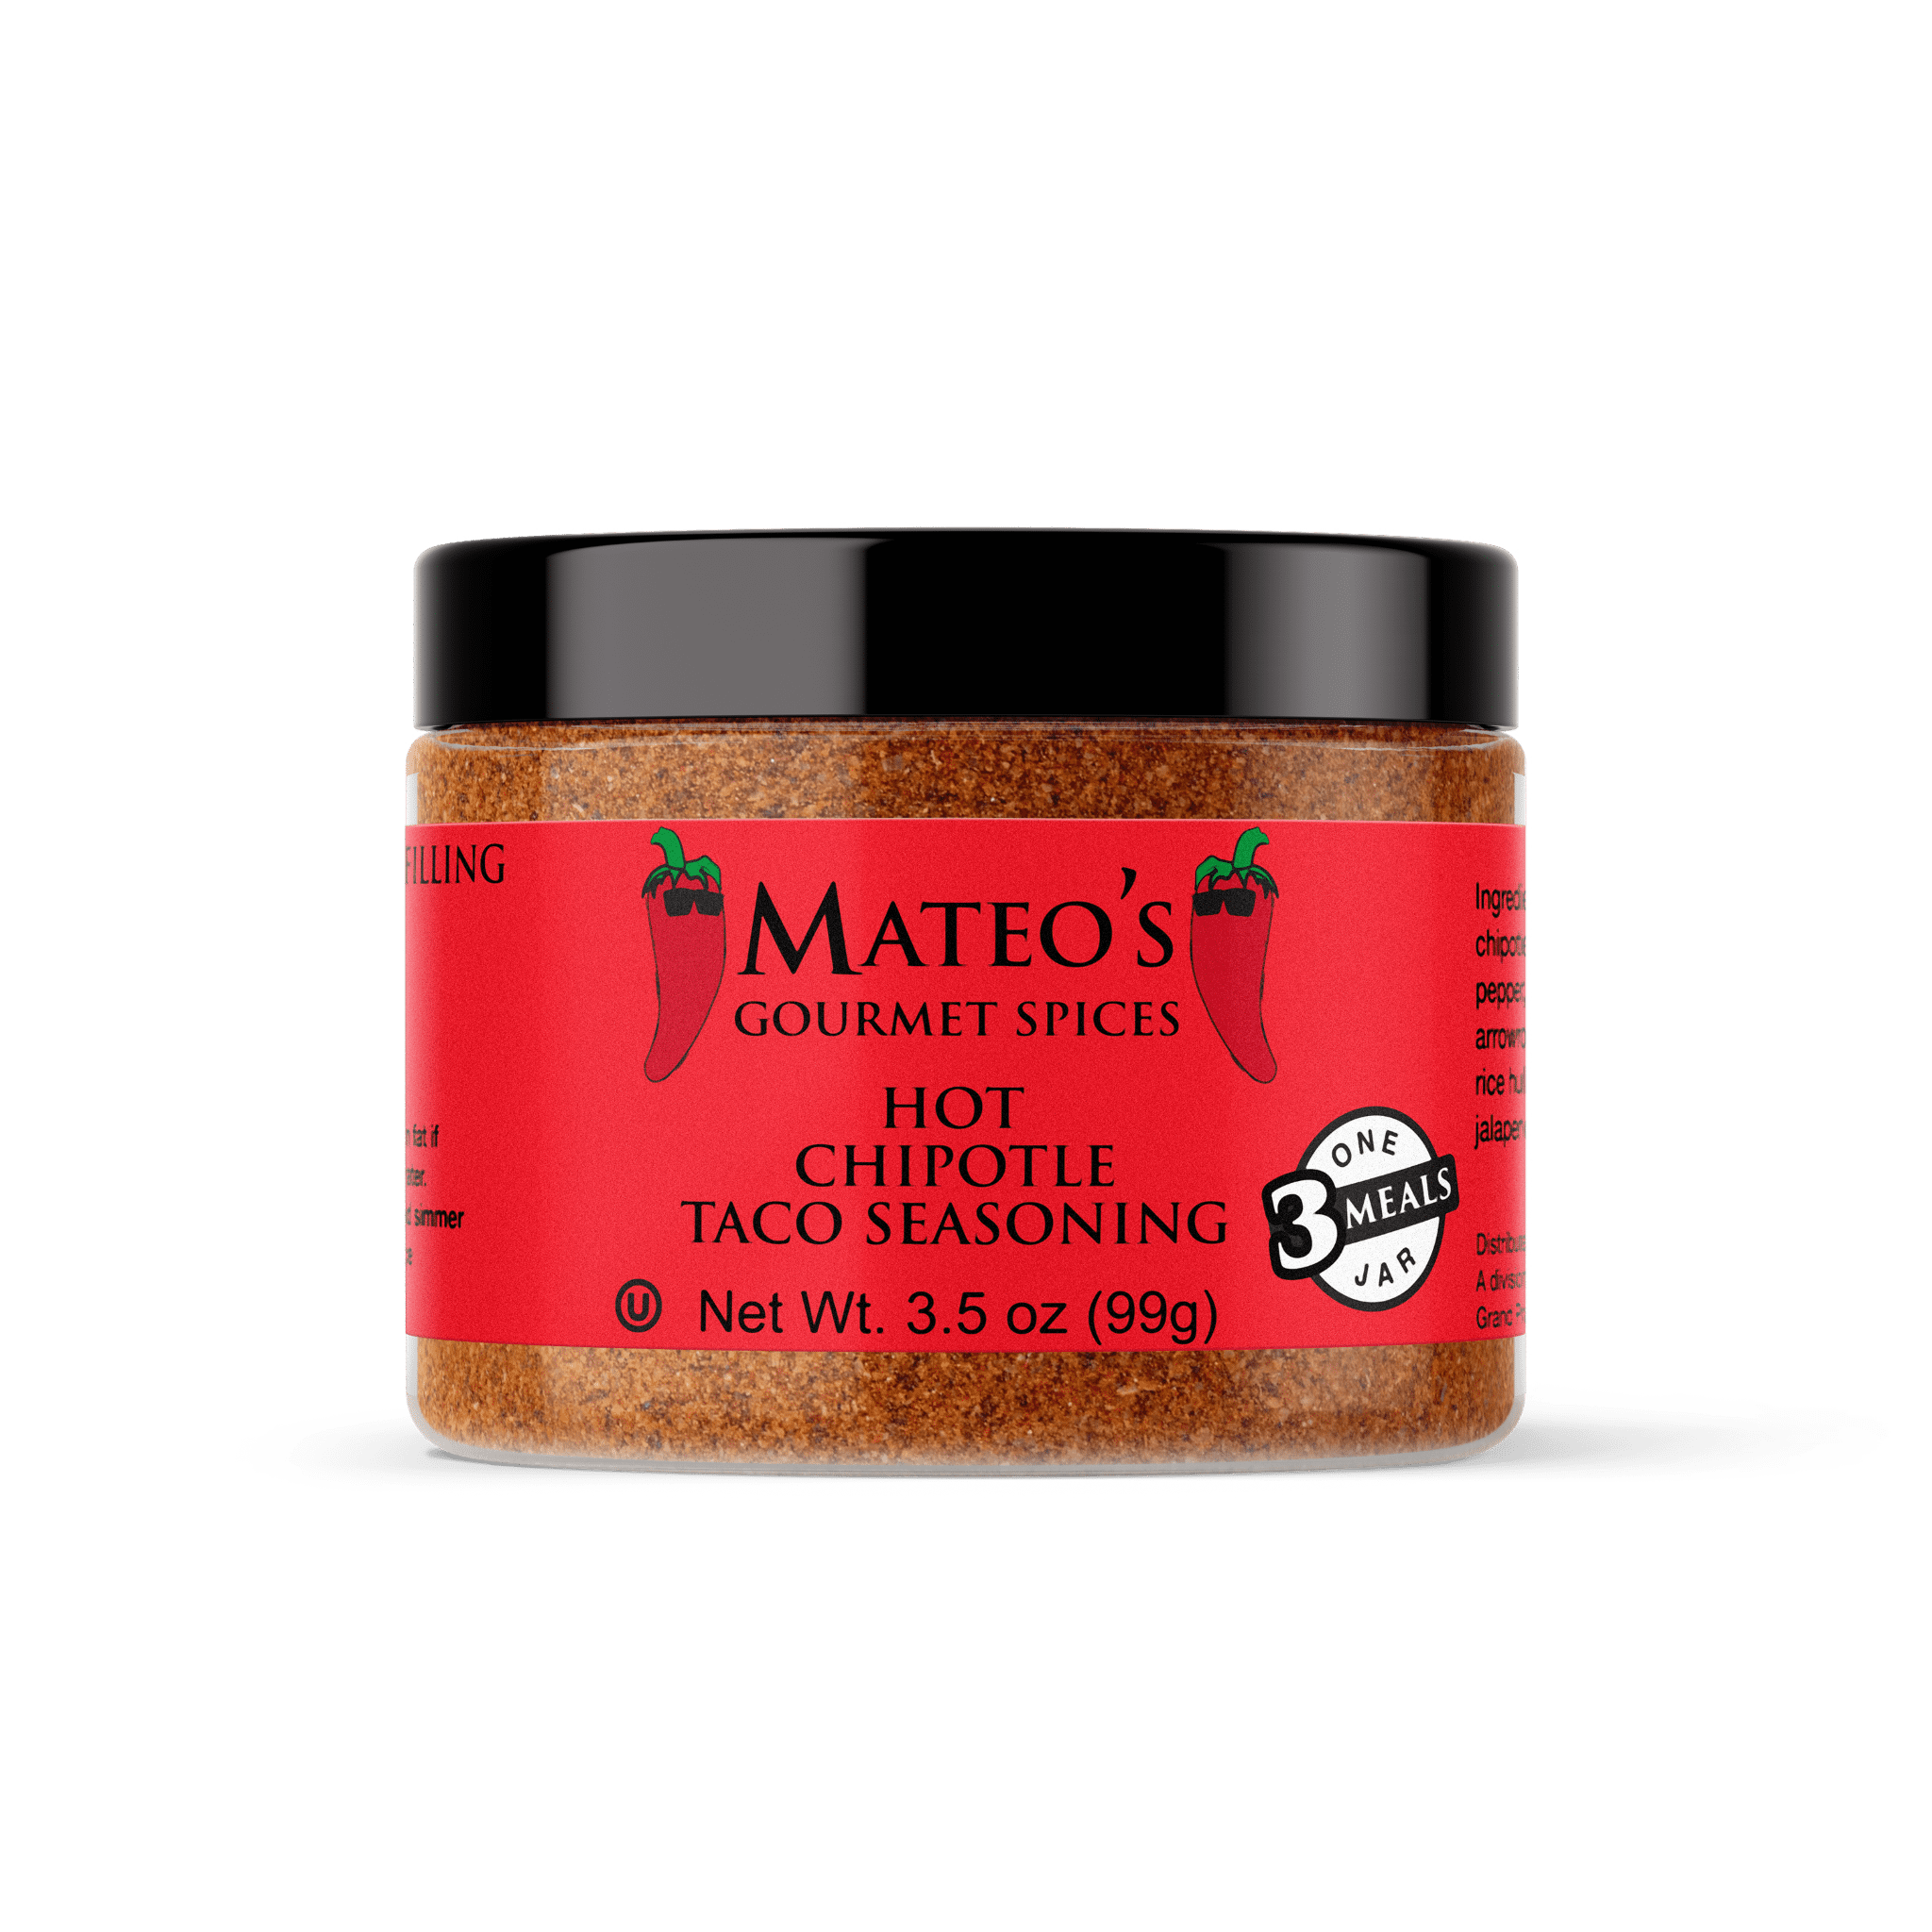 Mateos Brand Hot Chipotle Taco Seasoning Mix (3 Meals), 3.5 oz